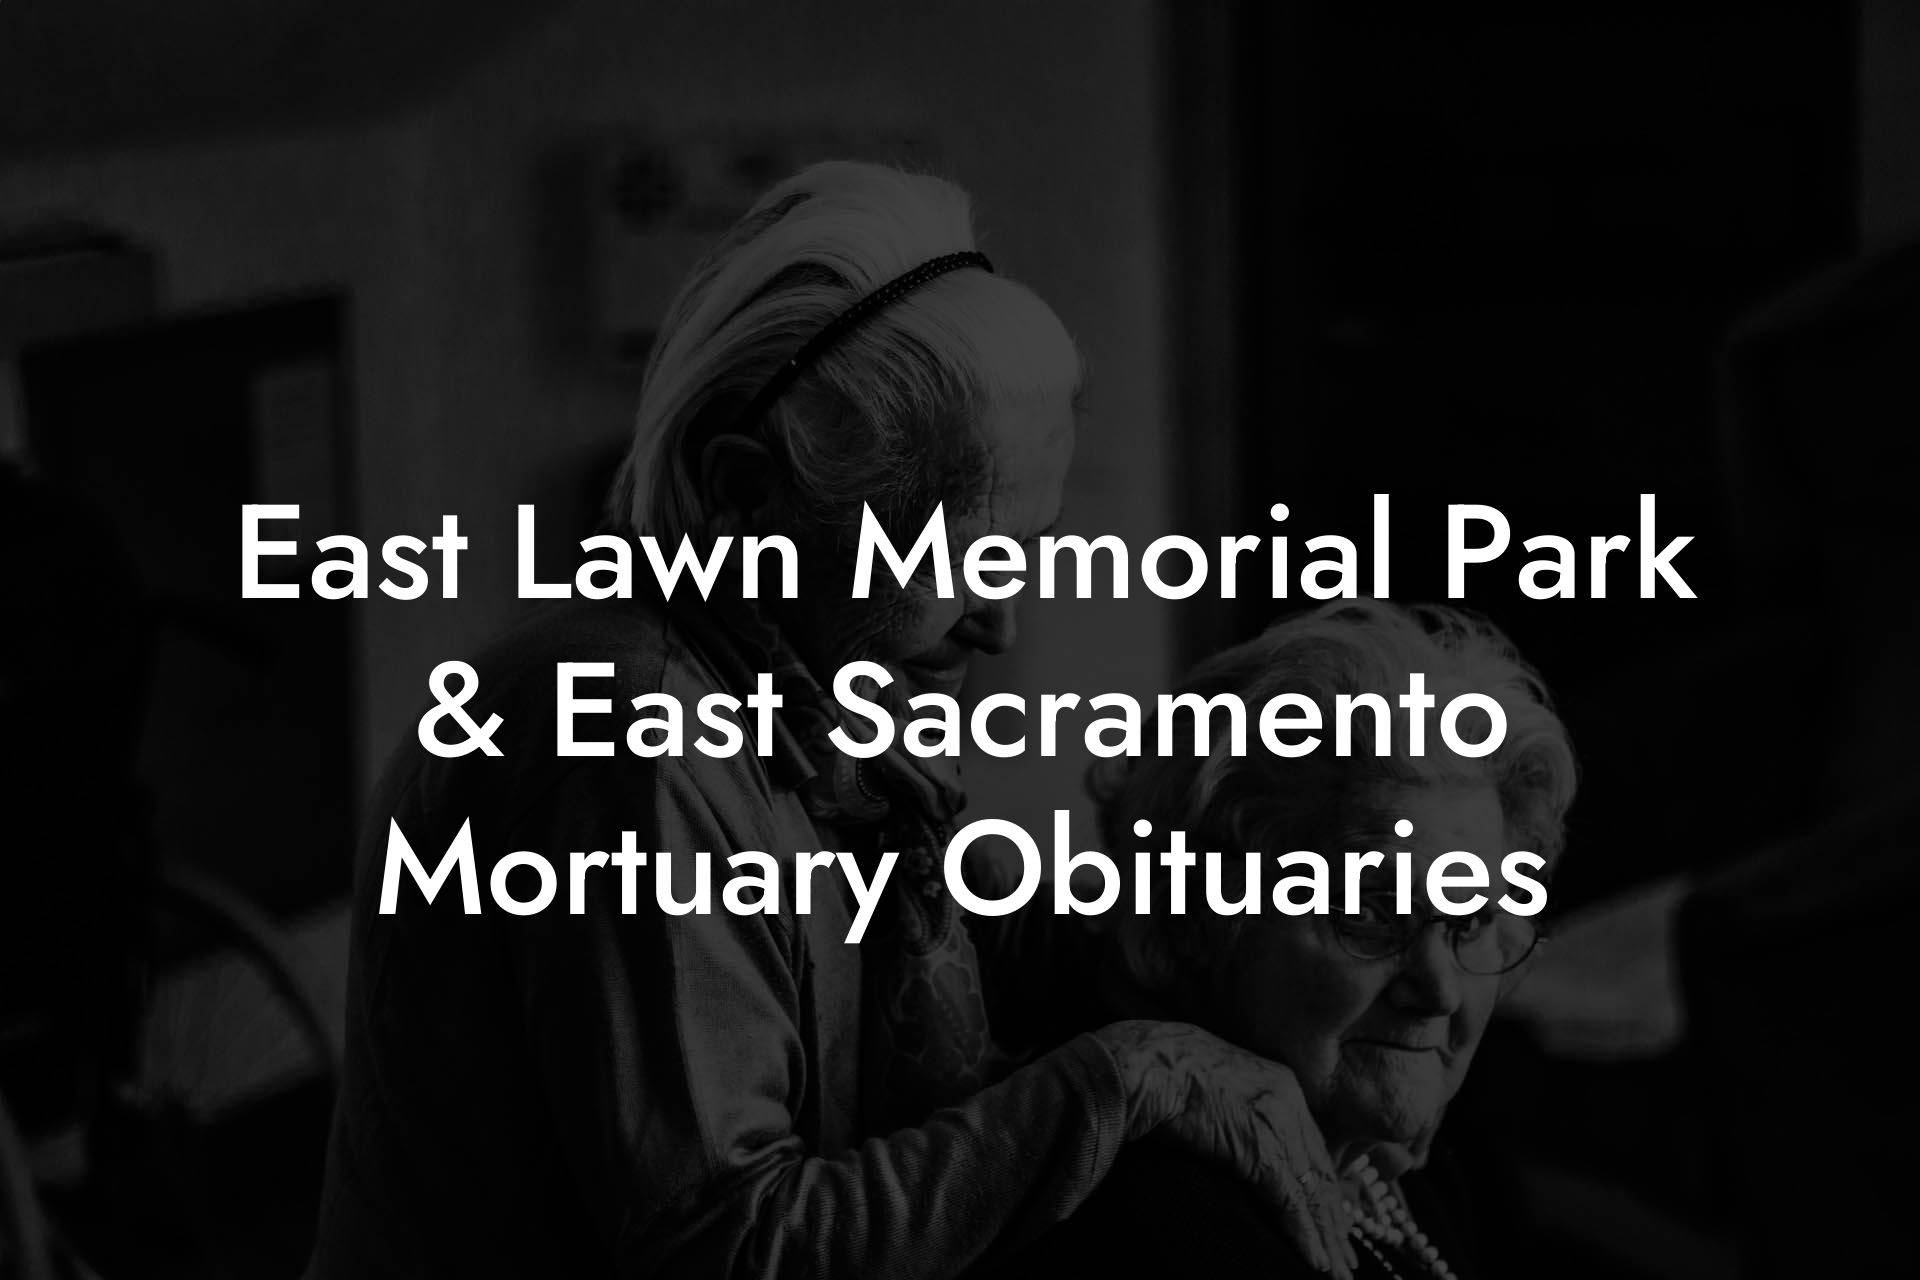 East Lawn Memorial Park & East Sacramento Mortuary Obituaries